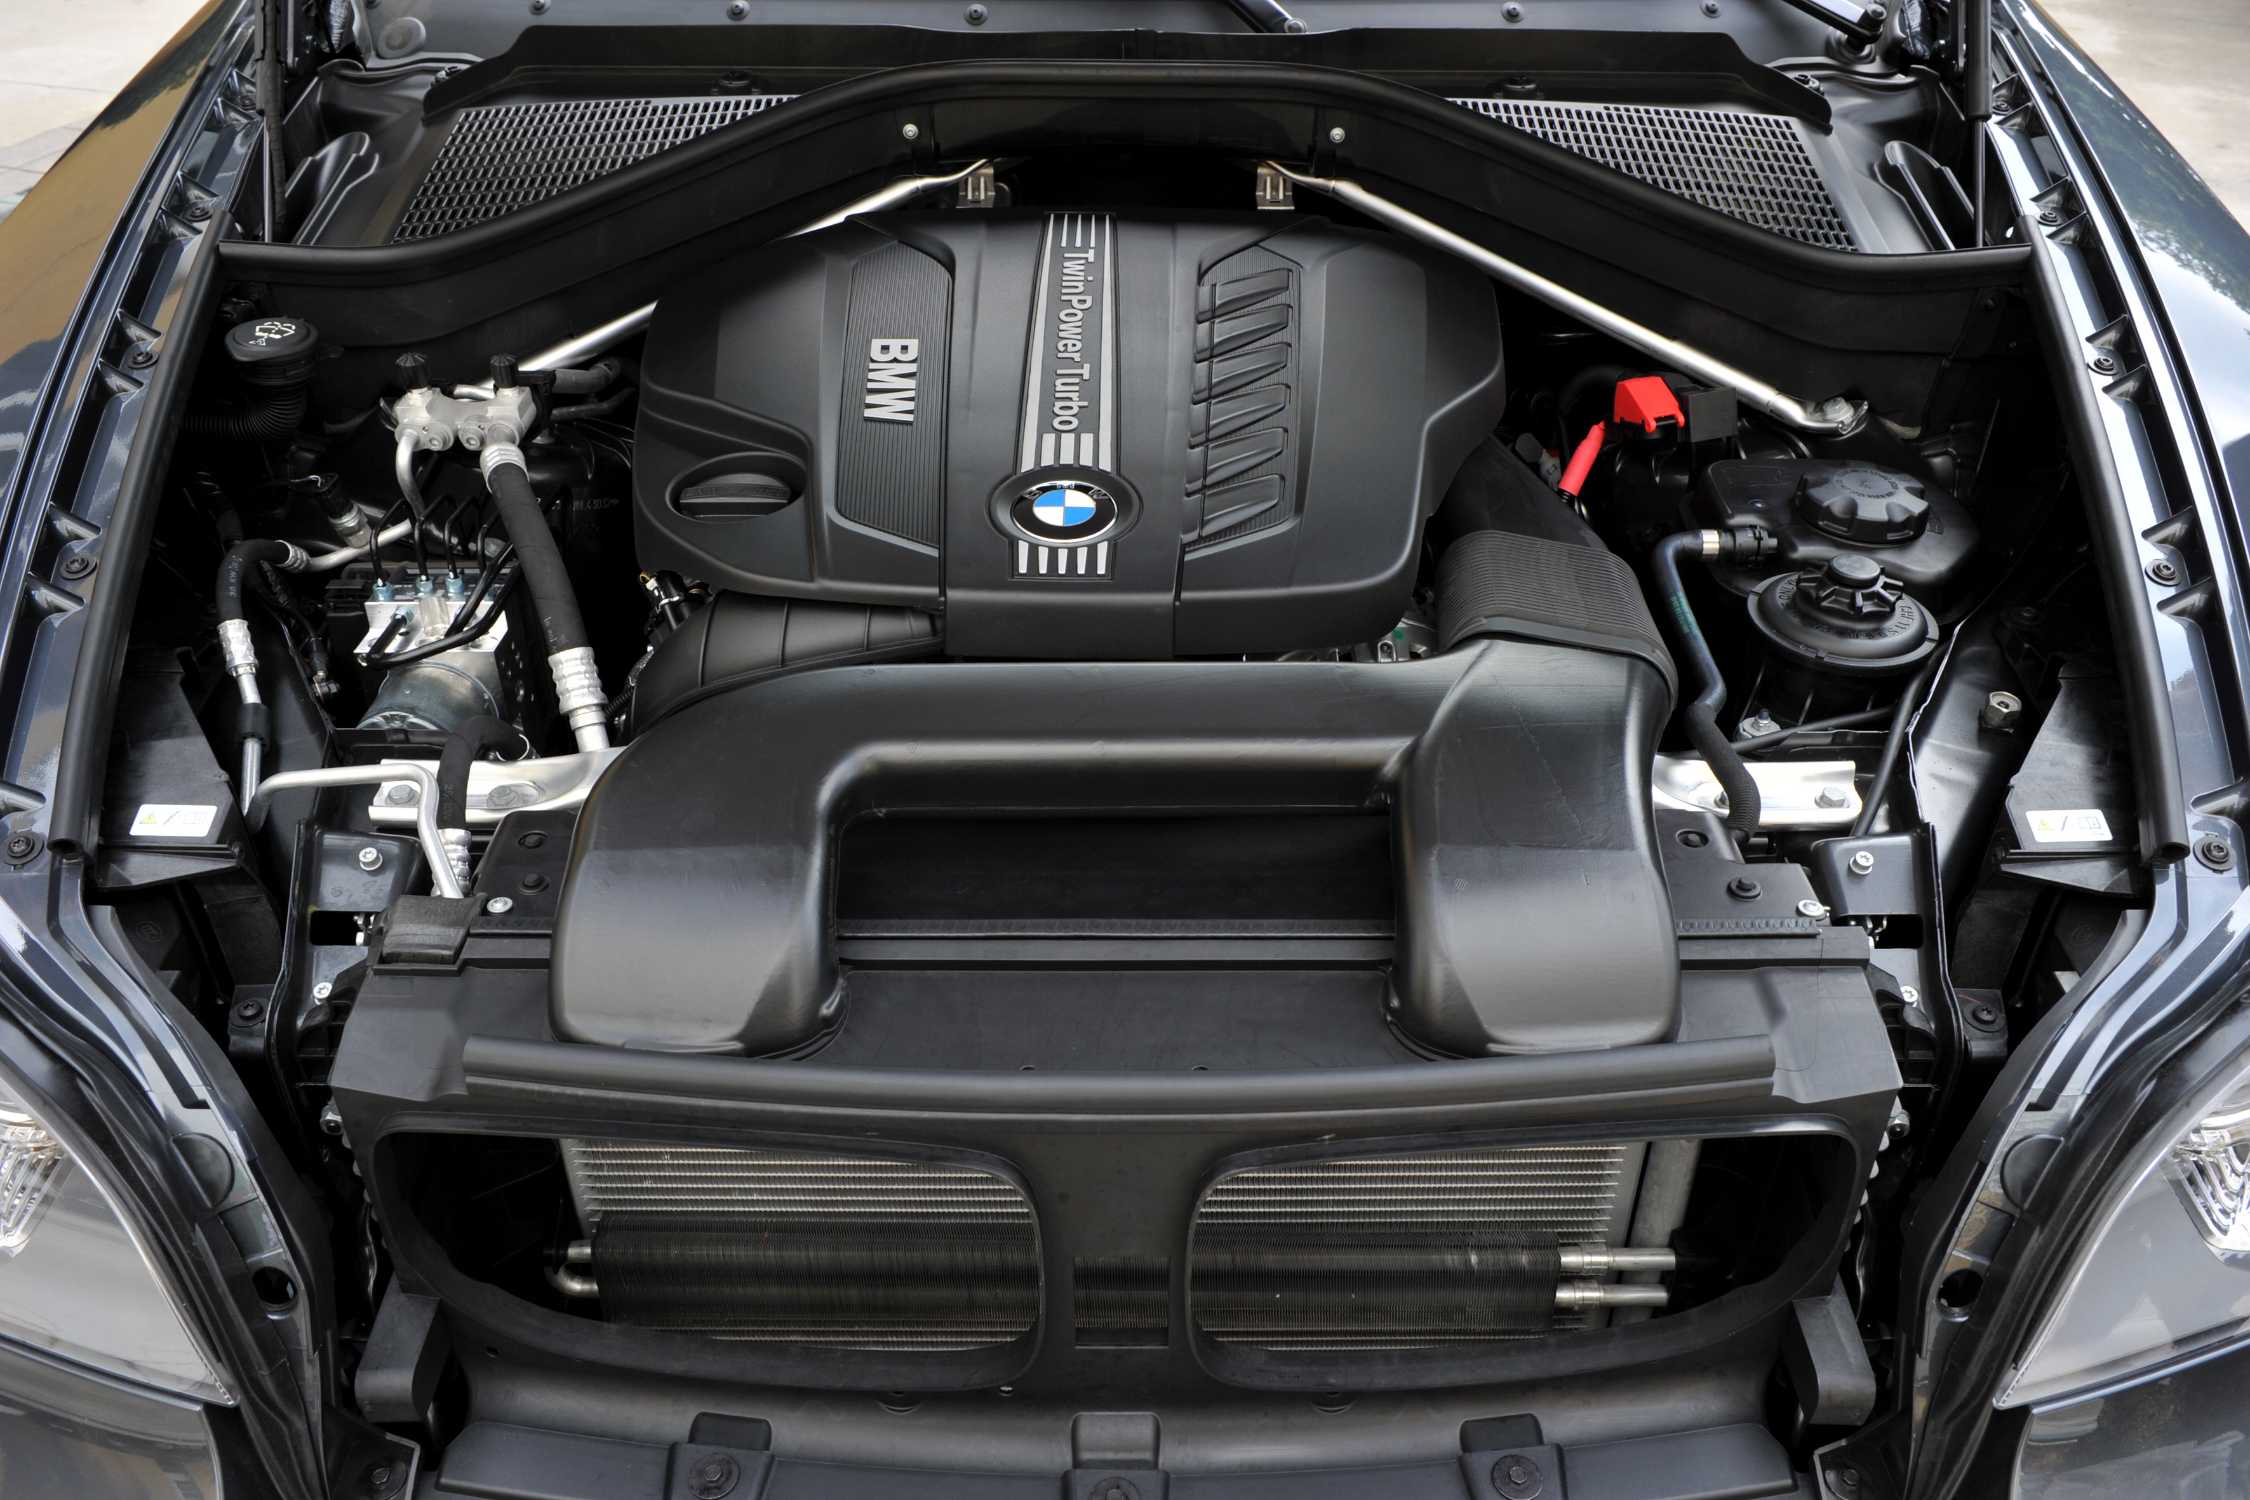 X6 моторы. BMW x5 e70 моторный отсек. Мотор 4.8 БМВ е70. BMW x5 e70 3.0 моторный отсек. Двигатель БМВ х5.